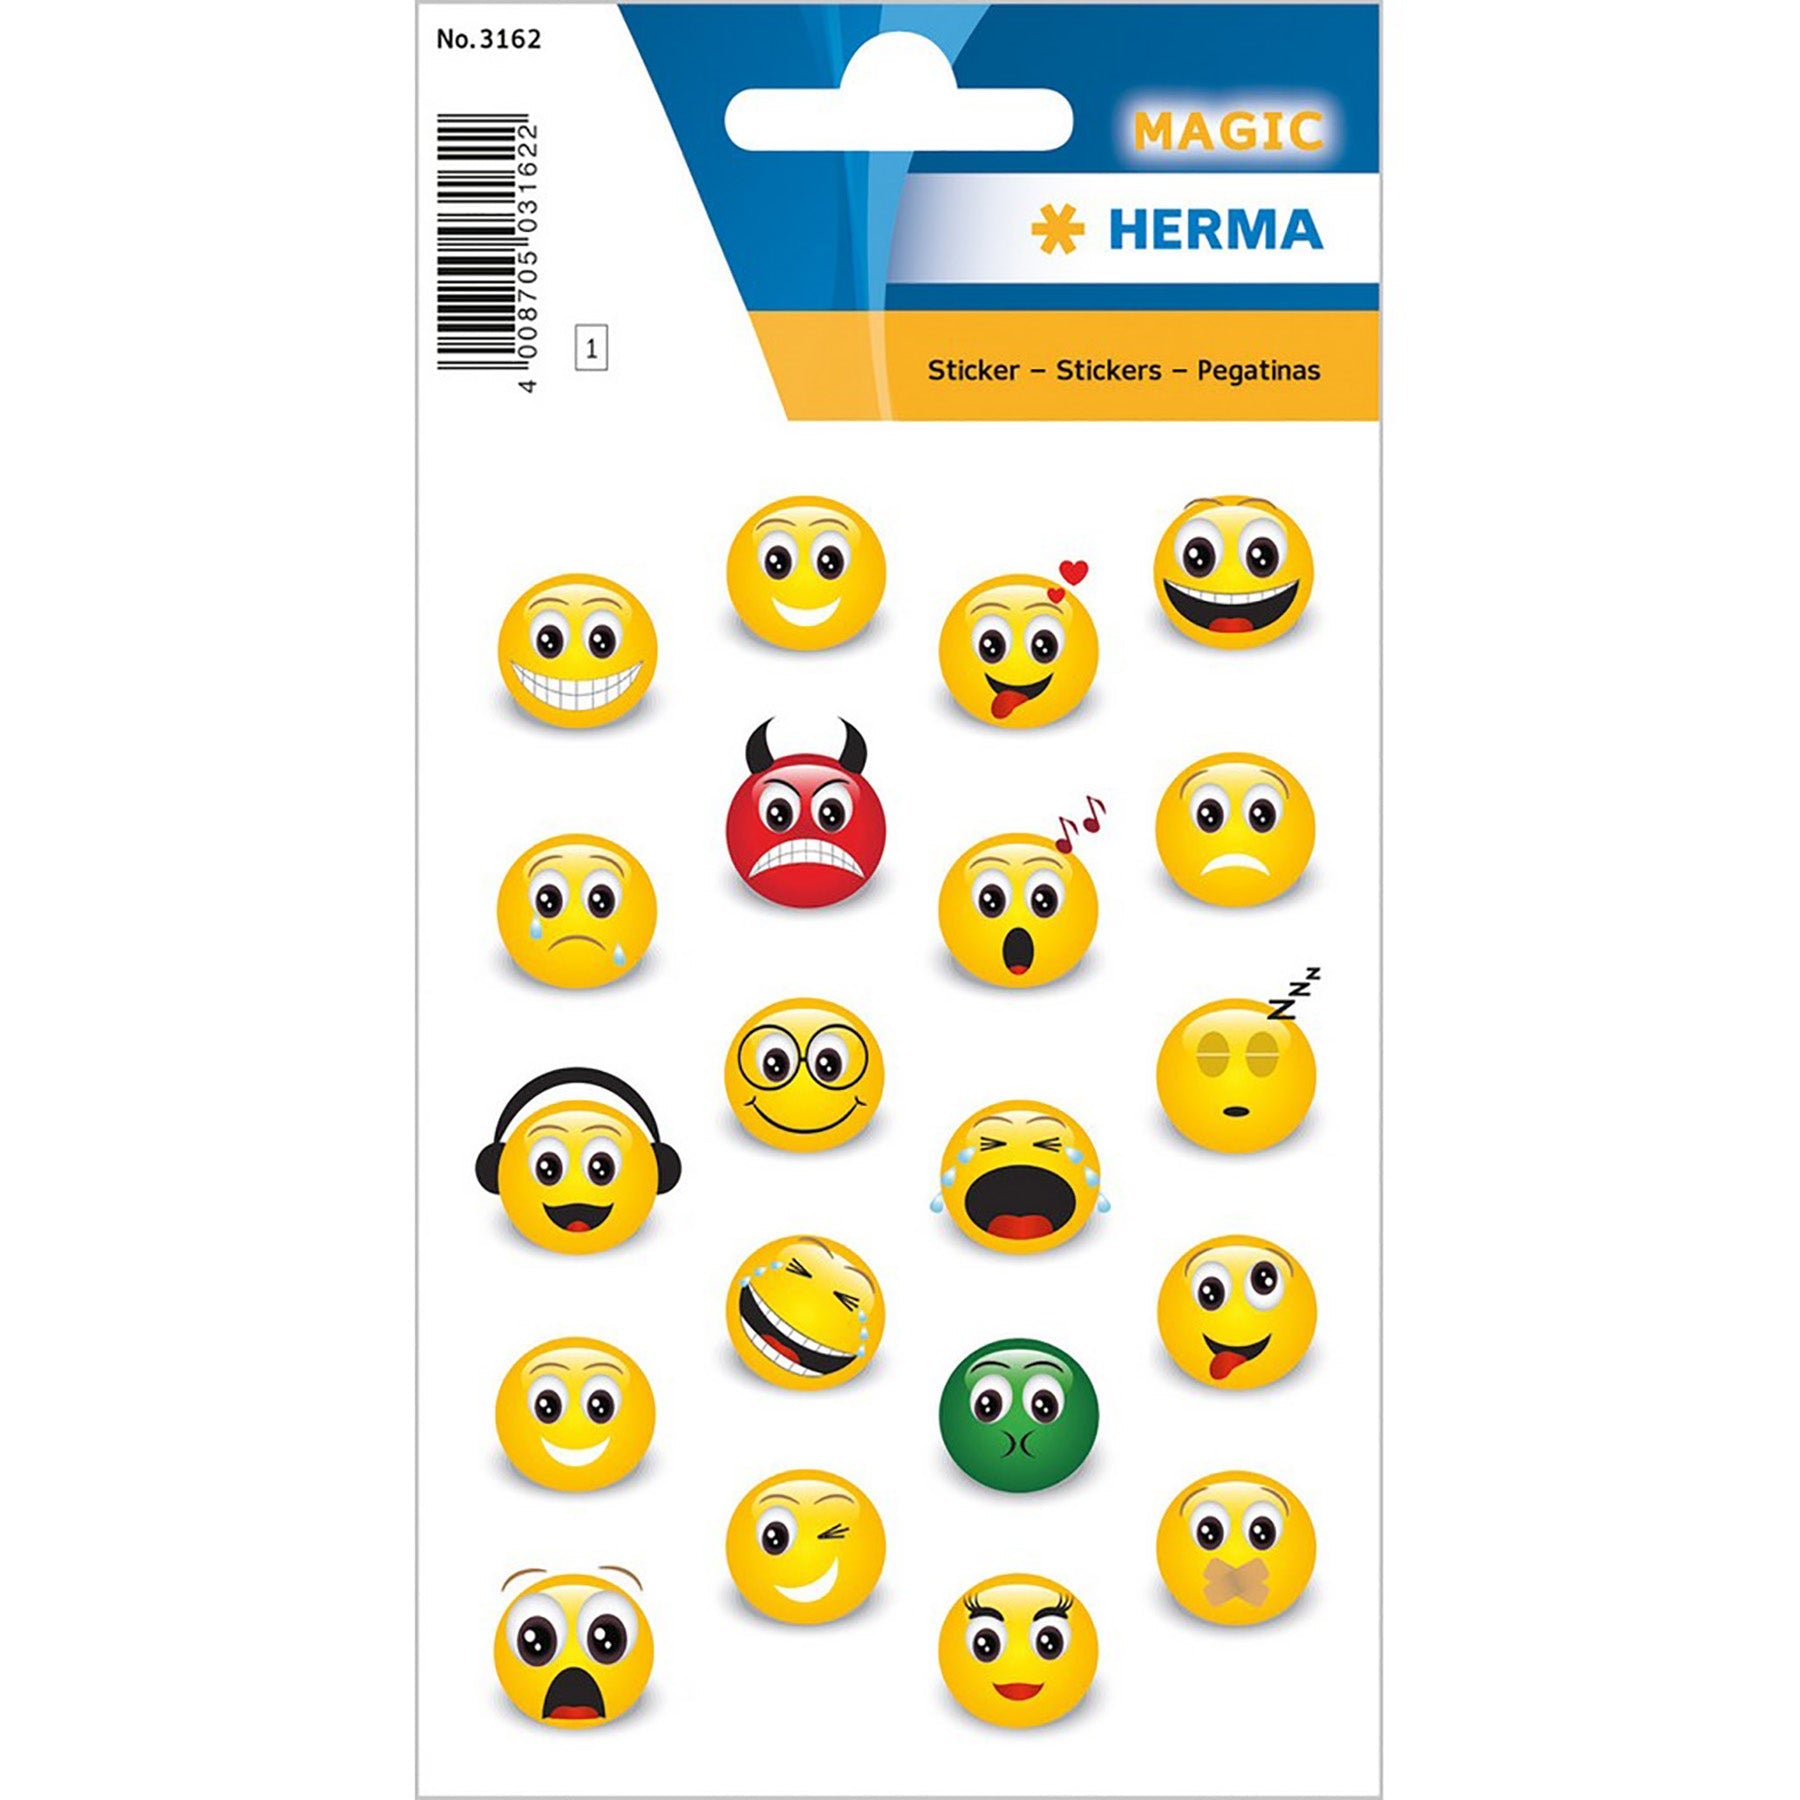 Herma Magic Stickers Emojis  4.75x3.1in Sheet